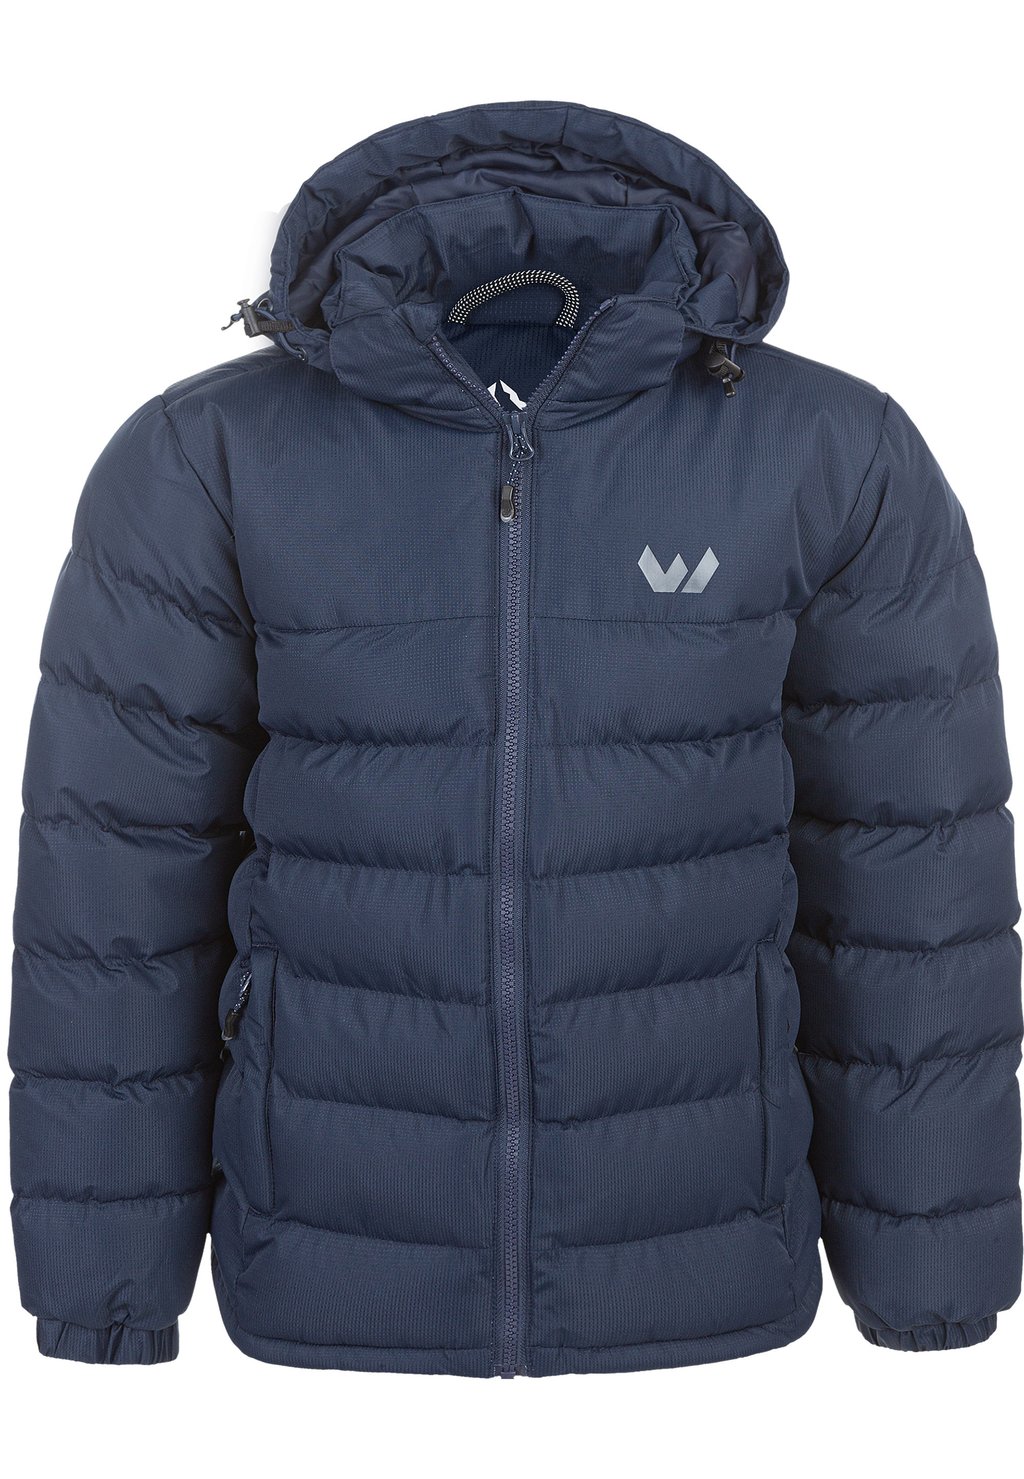 Зимняя куртка Whistler, цвет navy blazer толстовка ski pulli baggio whistler цвет navy blazer